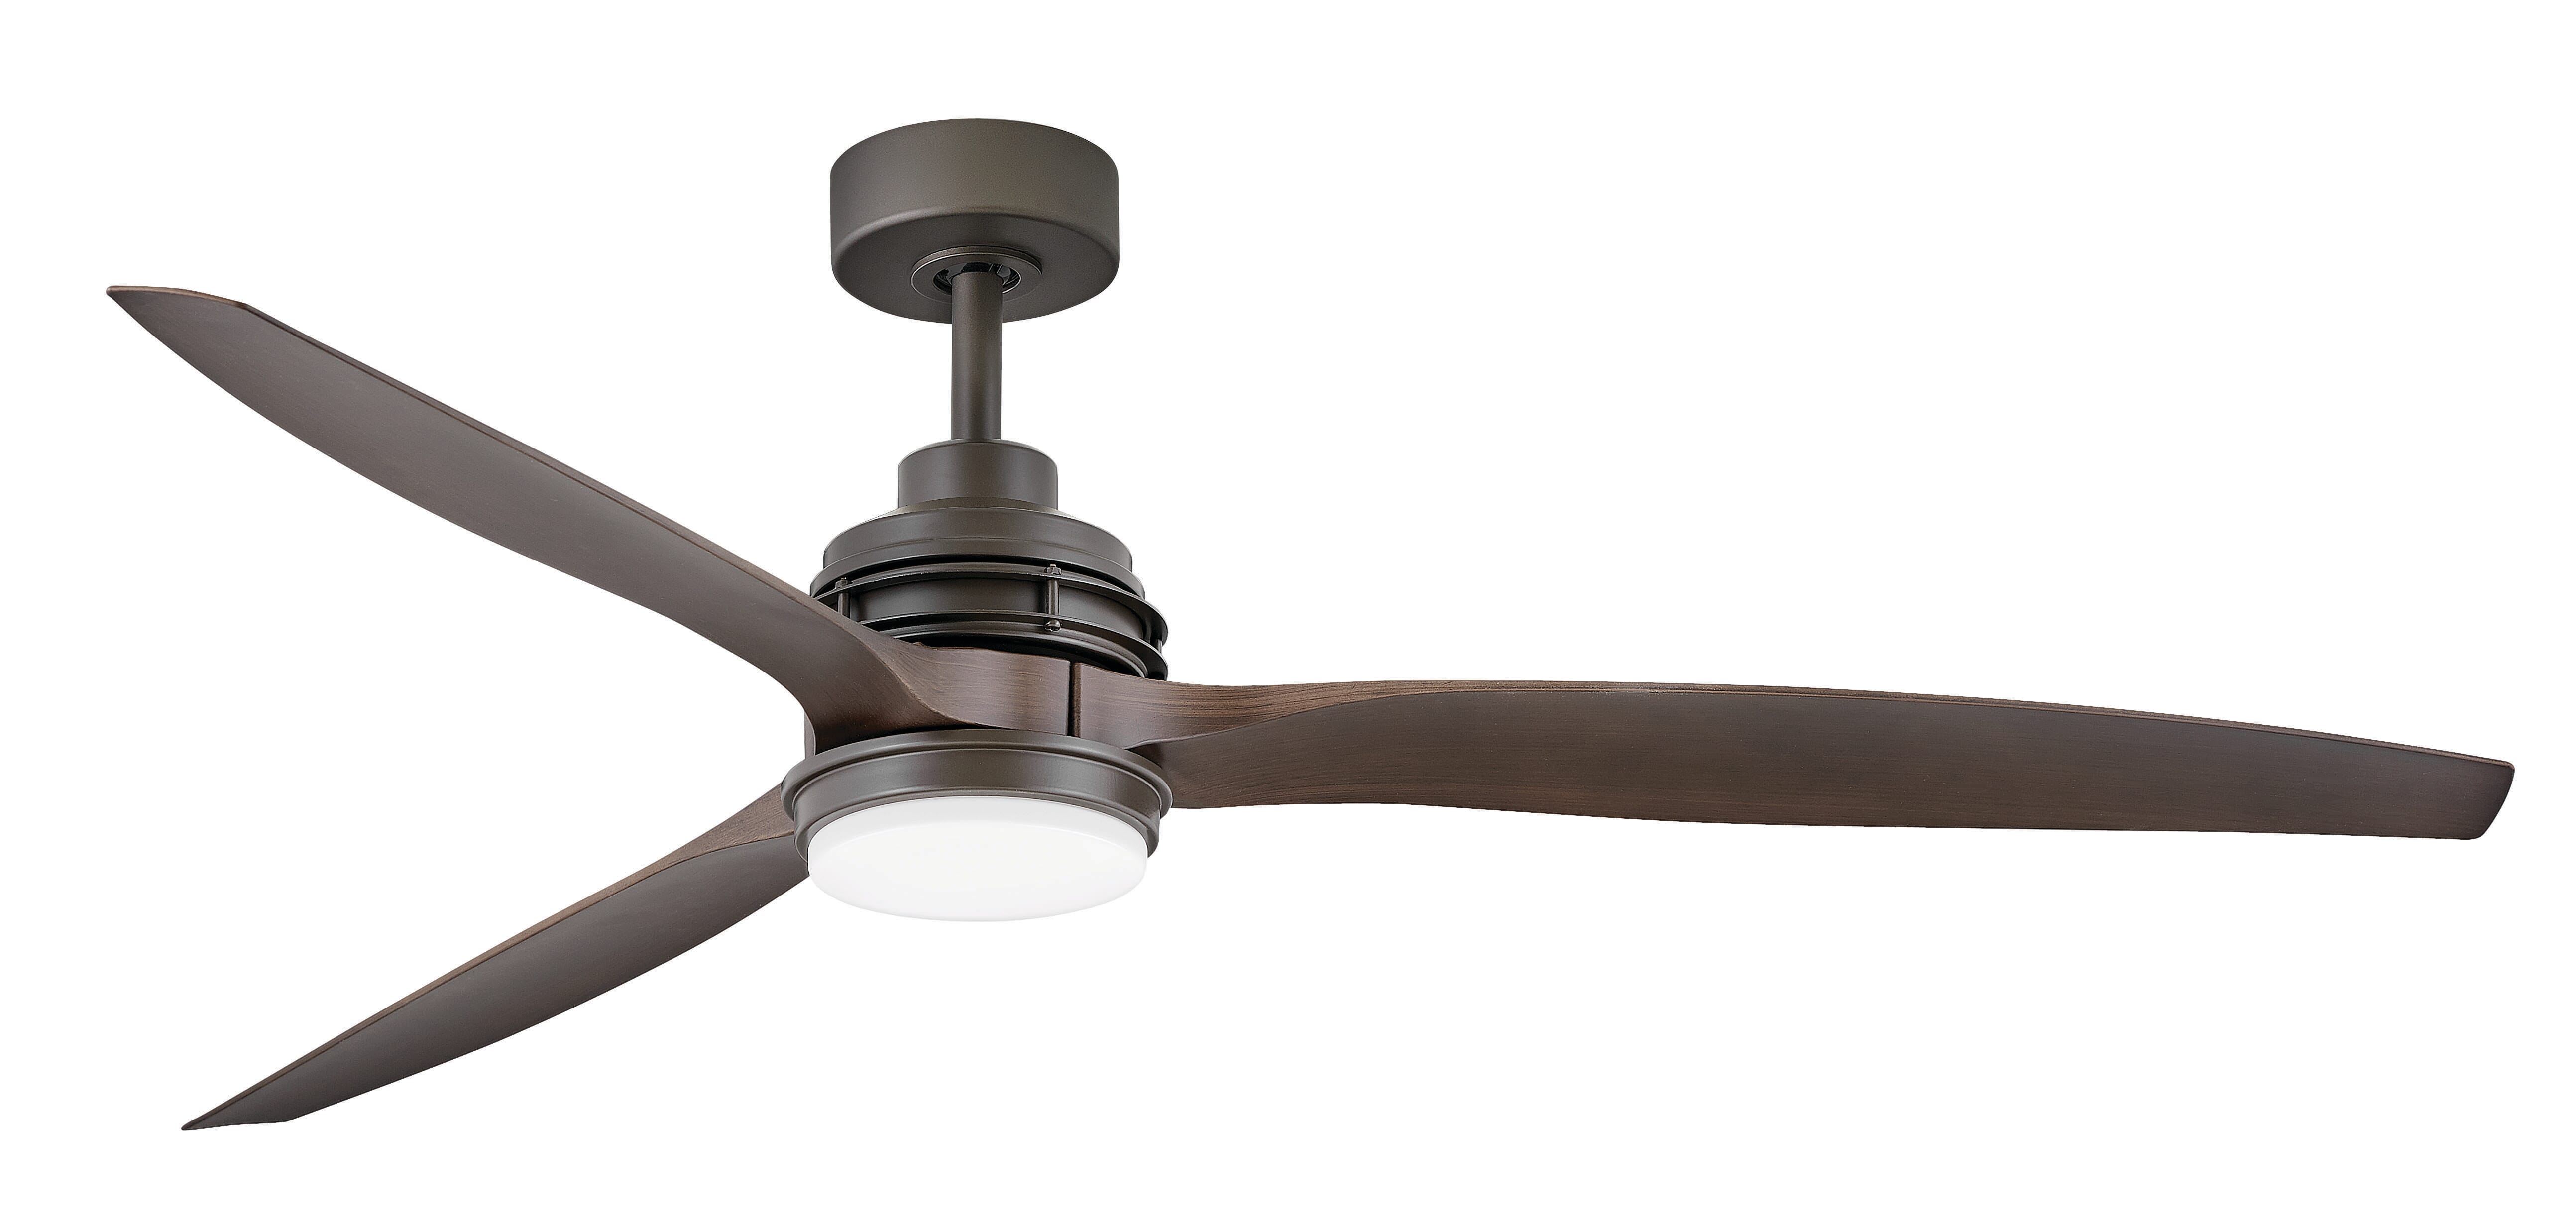 Hinkley Artiste LED 60" Indoor/Outdoor Ceiling Fan in Metallic Matte Bronze - 900160FMM-LWD